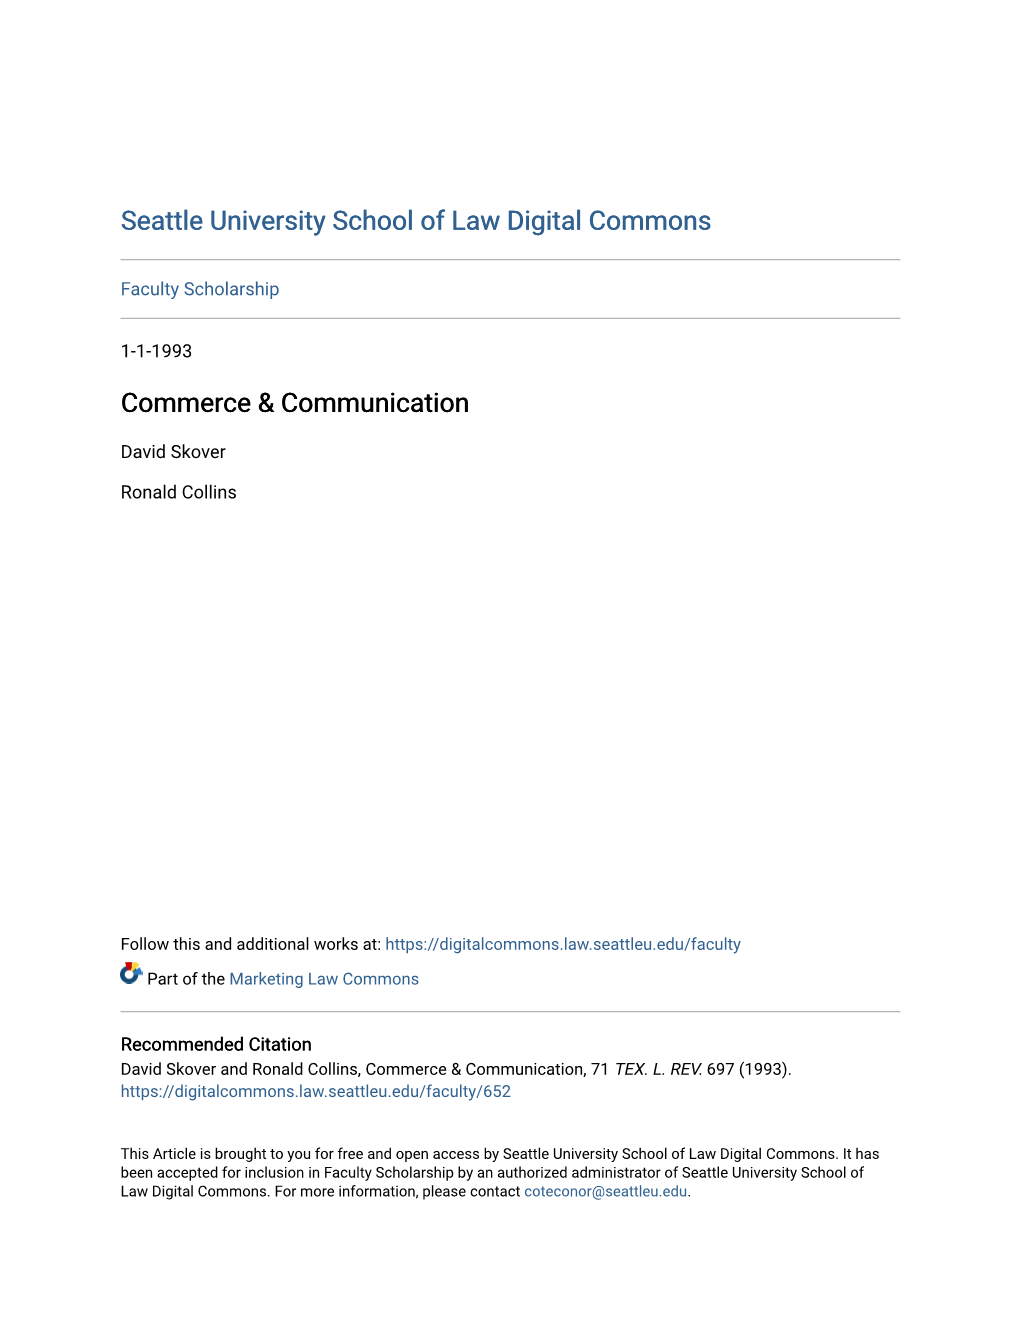 Commerce & Communication